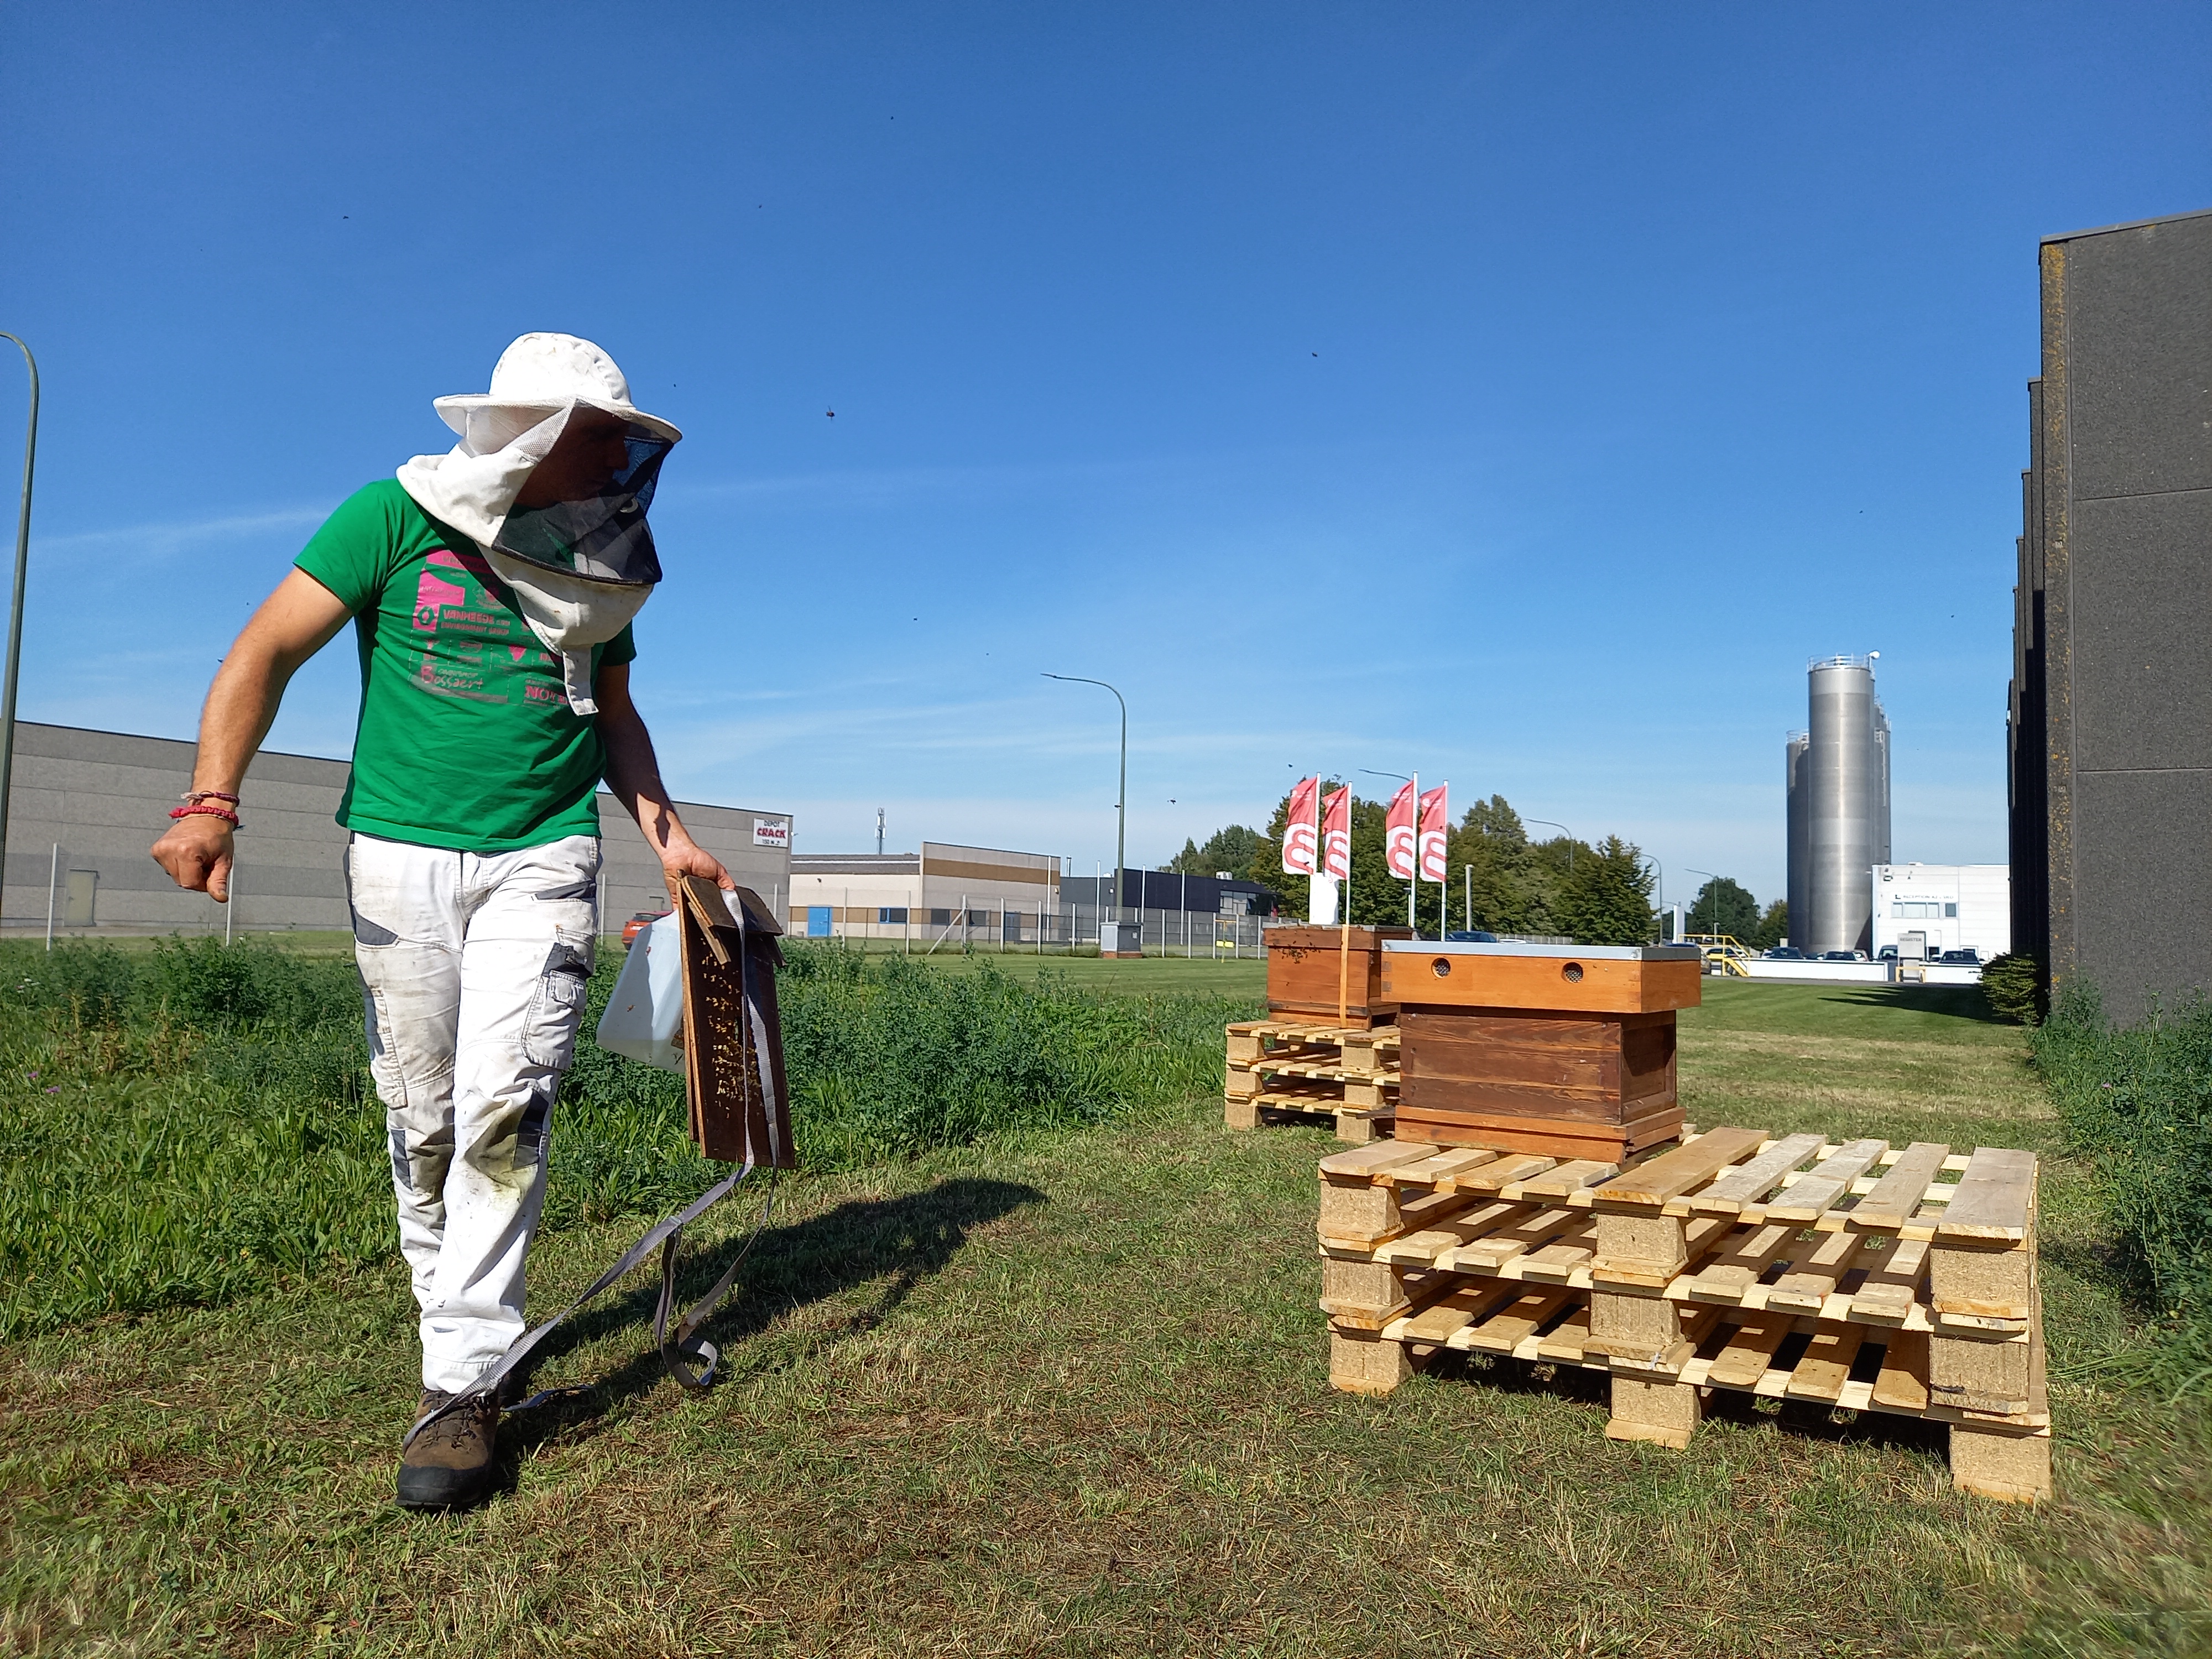 Our honey bee program